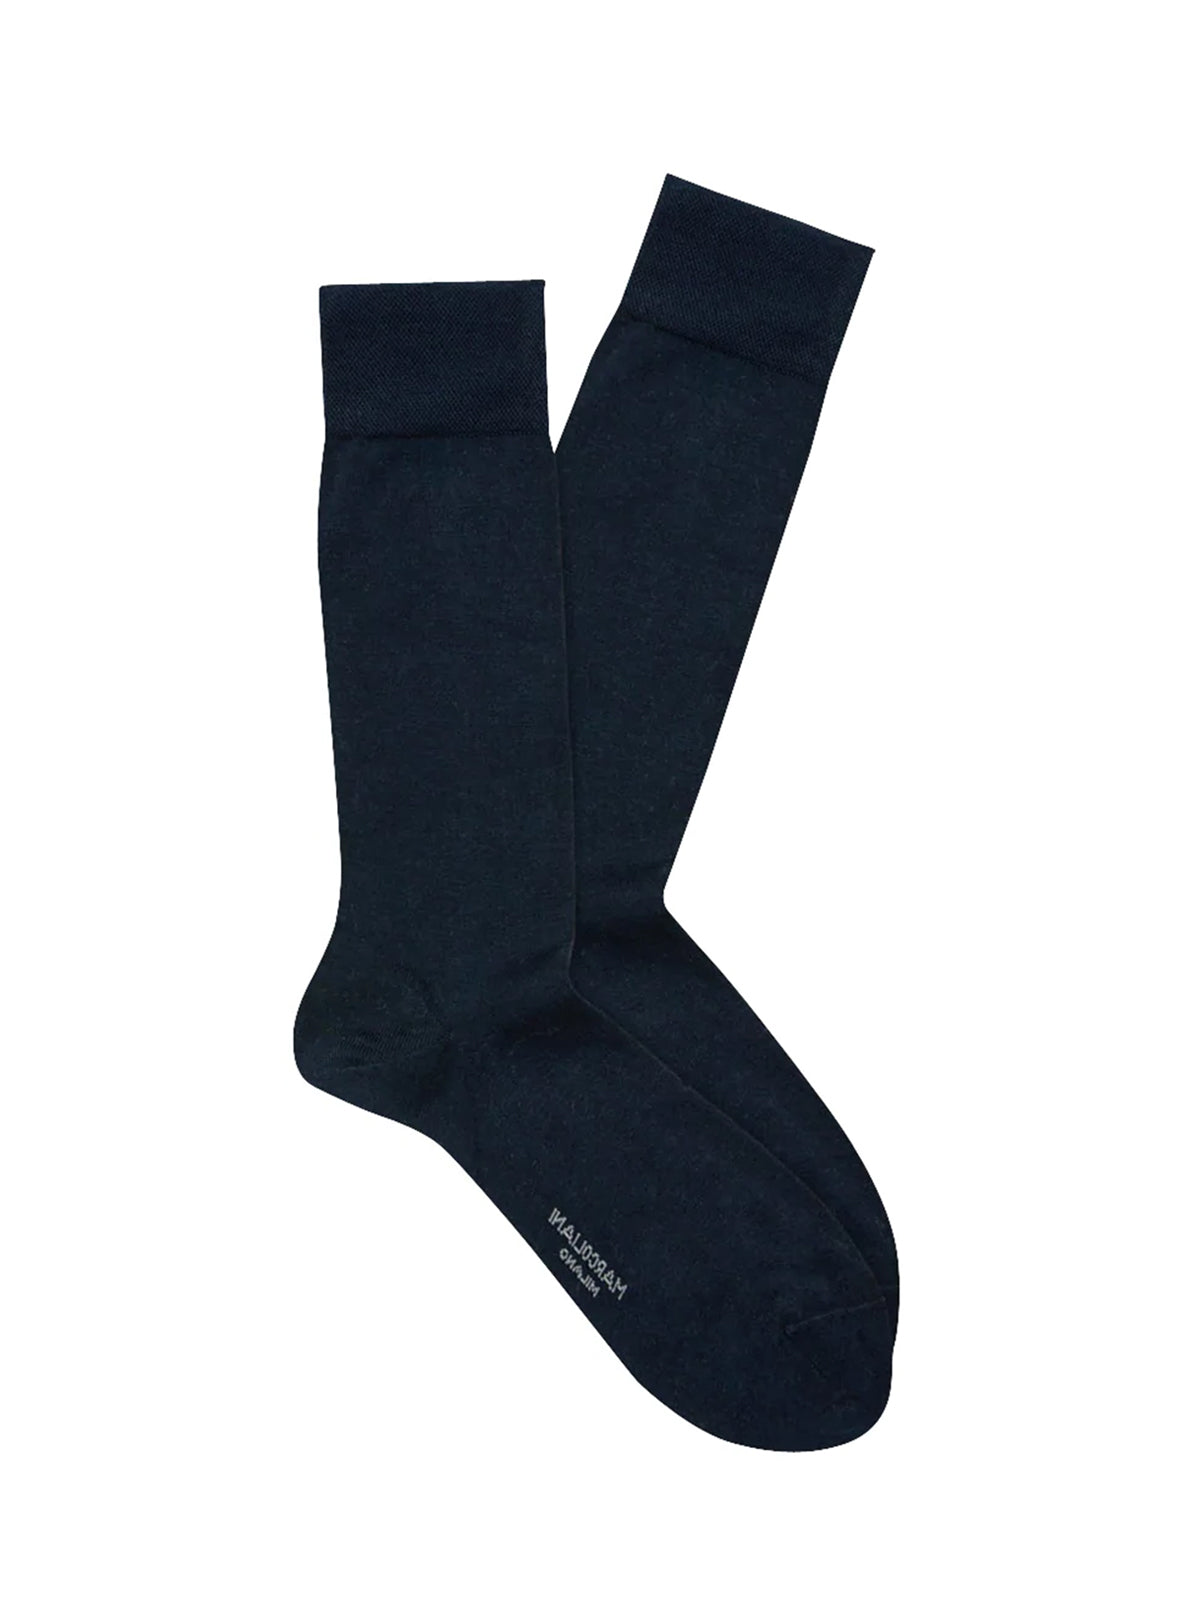 Marcoliani Pima Cotton Classic Plain Navy Socks